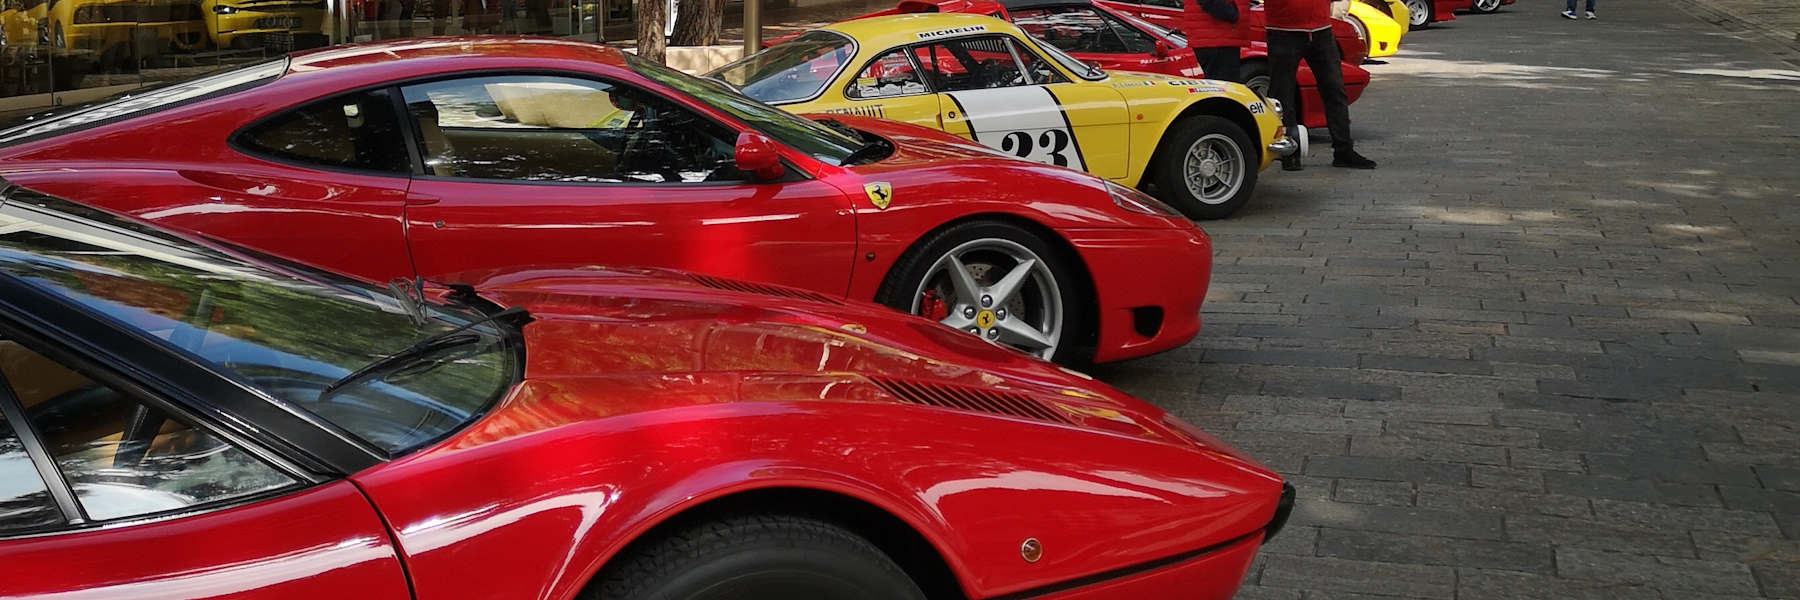 Ferrari Gathering